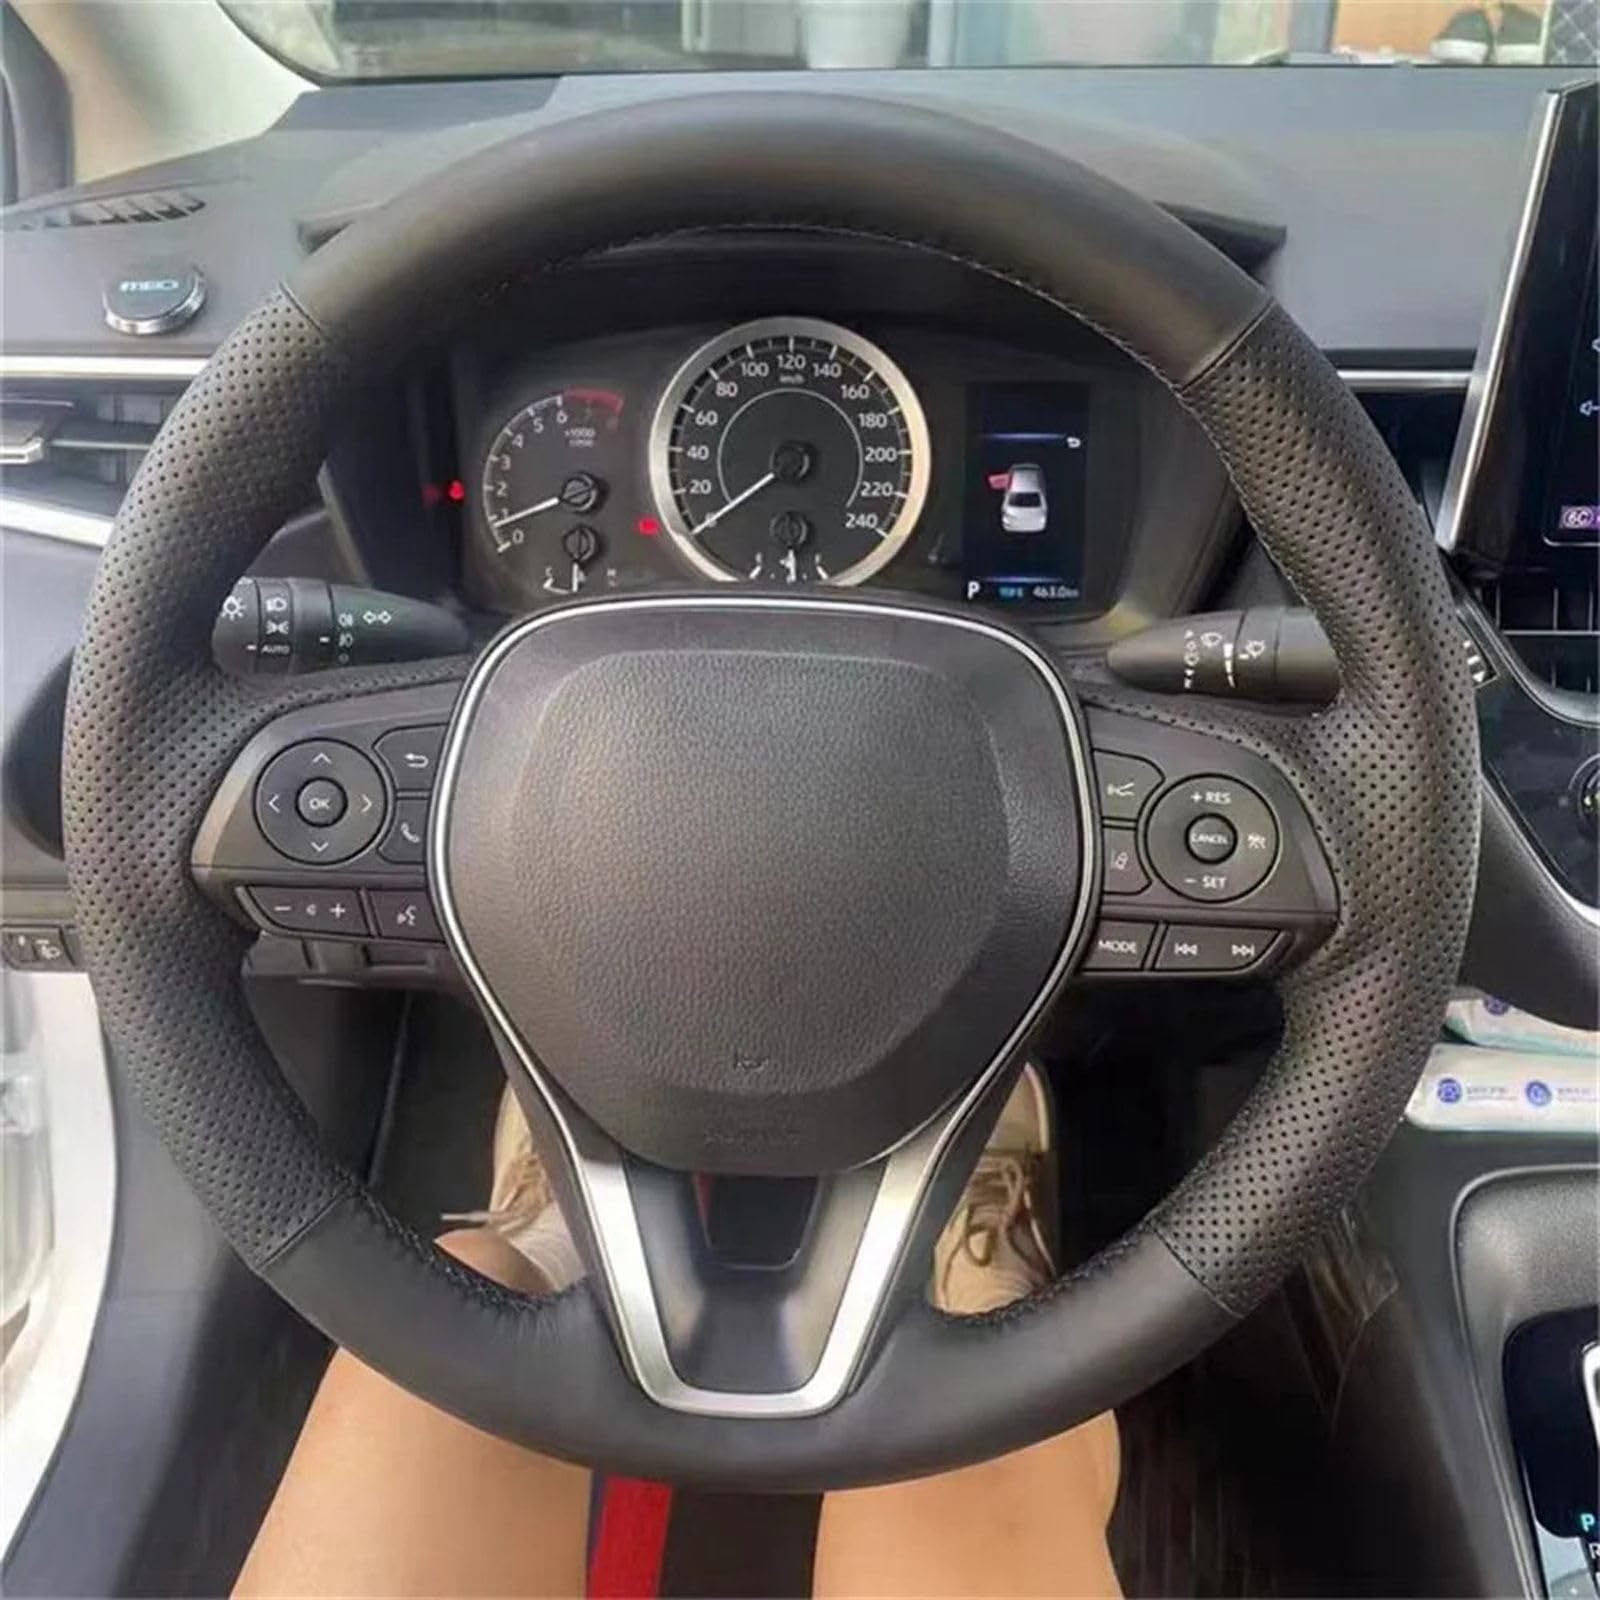 TQABADQ DIY Car Steering Wheel Cover Microfiber Auto Interior,for Toyota Avalon Camry Crown 2018-2021 RAV4 2019 Corolla 2018-2021 von TQABADQ